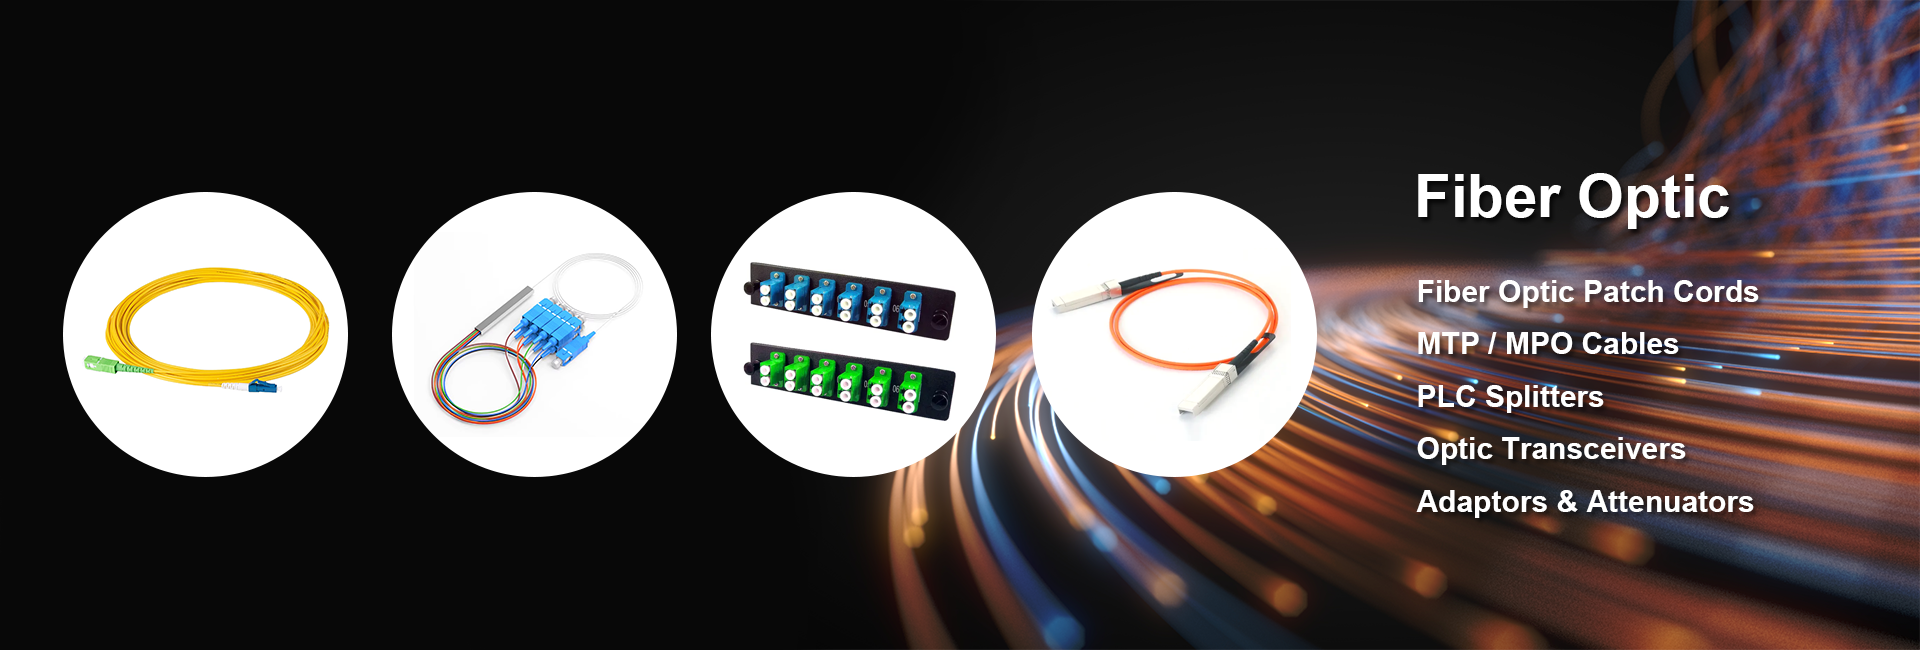 Fiber optic patch cord, fiber optic cable, plc splitter, optic transceiver, bidi SFP, MTP cable, MPO cable, optic attenuator, optic adaptor